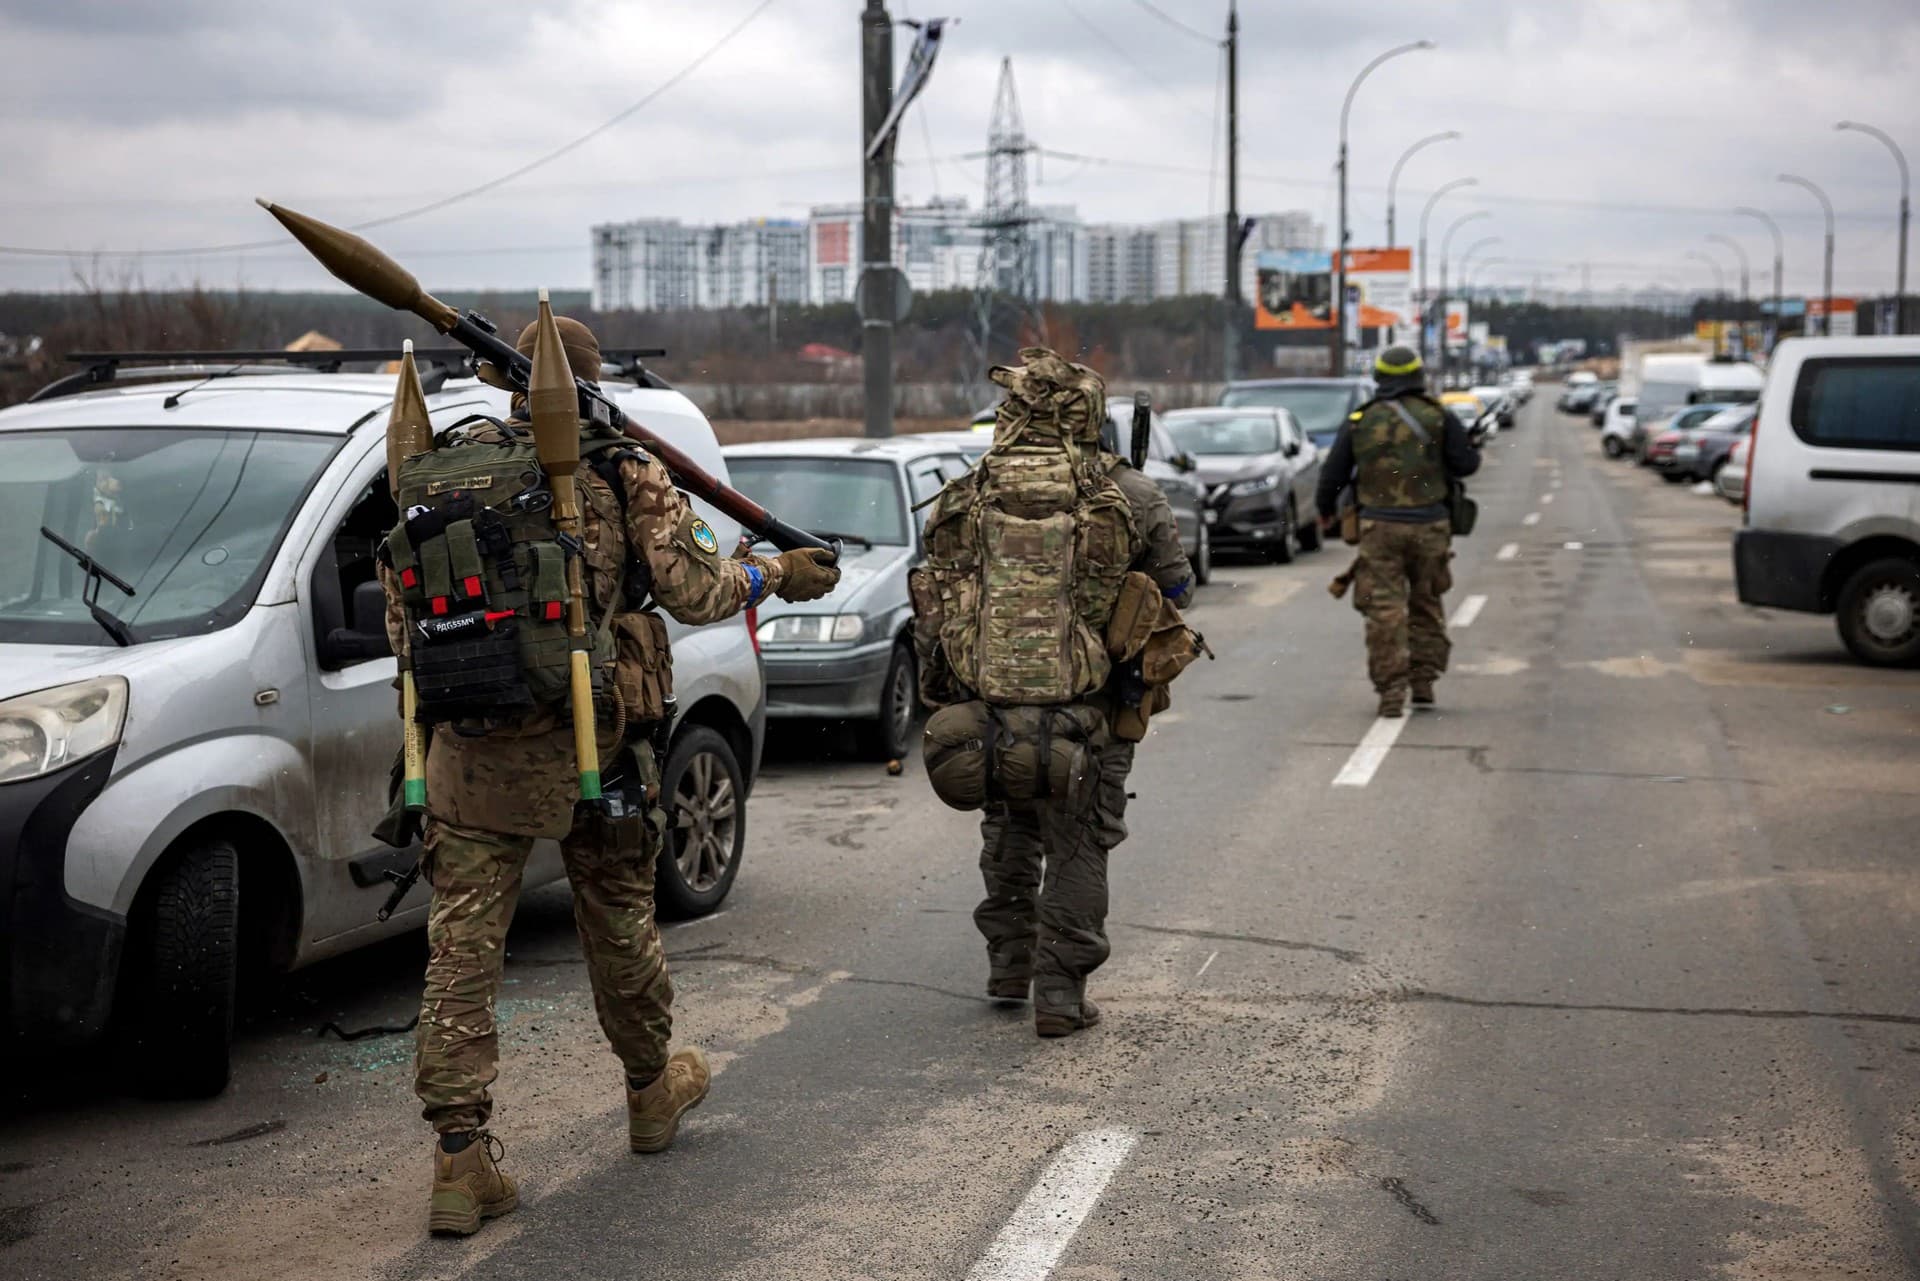 Ukrainian servicemen carry rocket-propelled grenades and sniper rifles near of Irpin